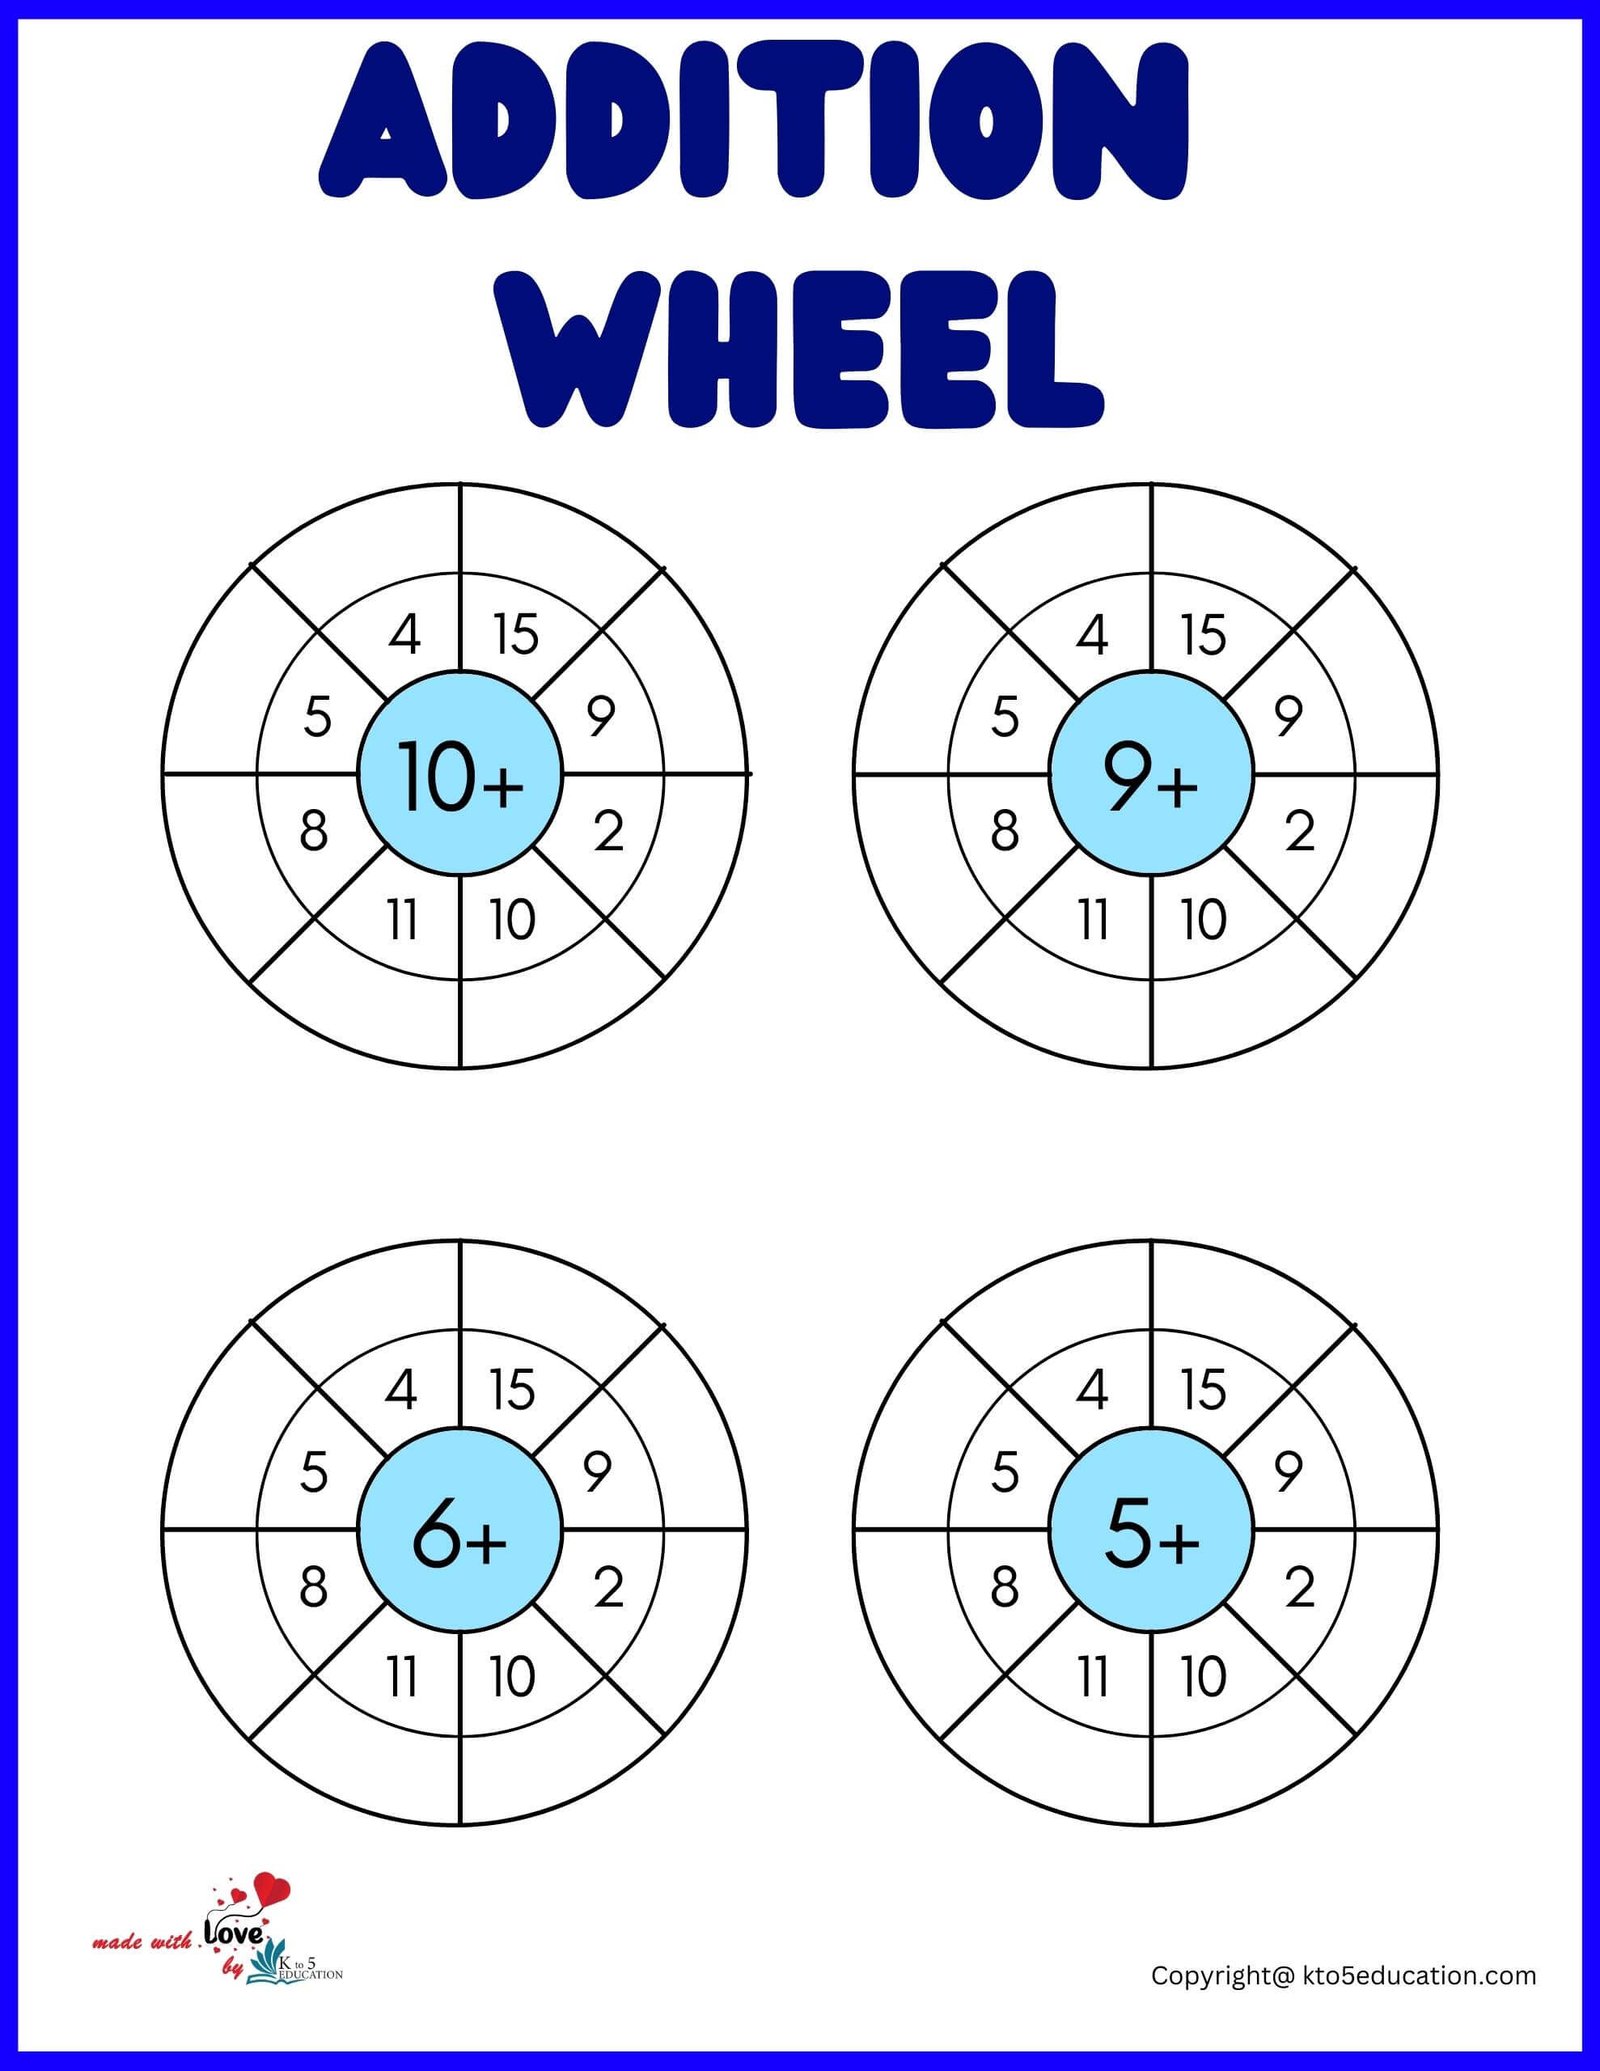 Addition Wheel For Online Practice Worksheets